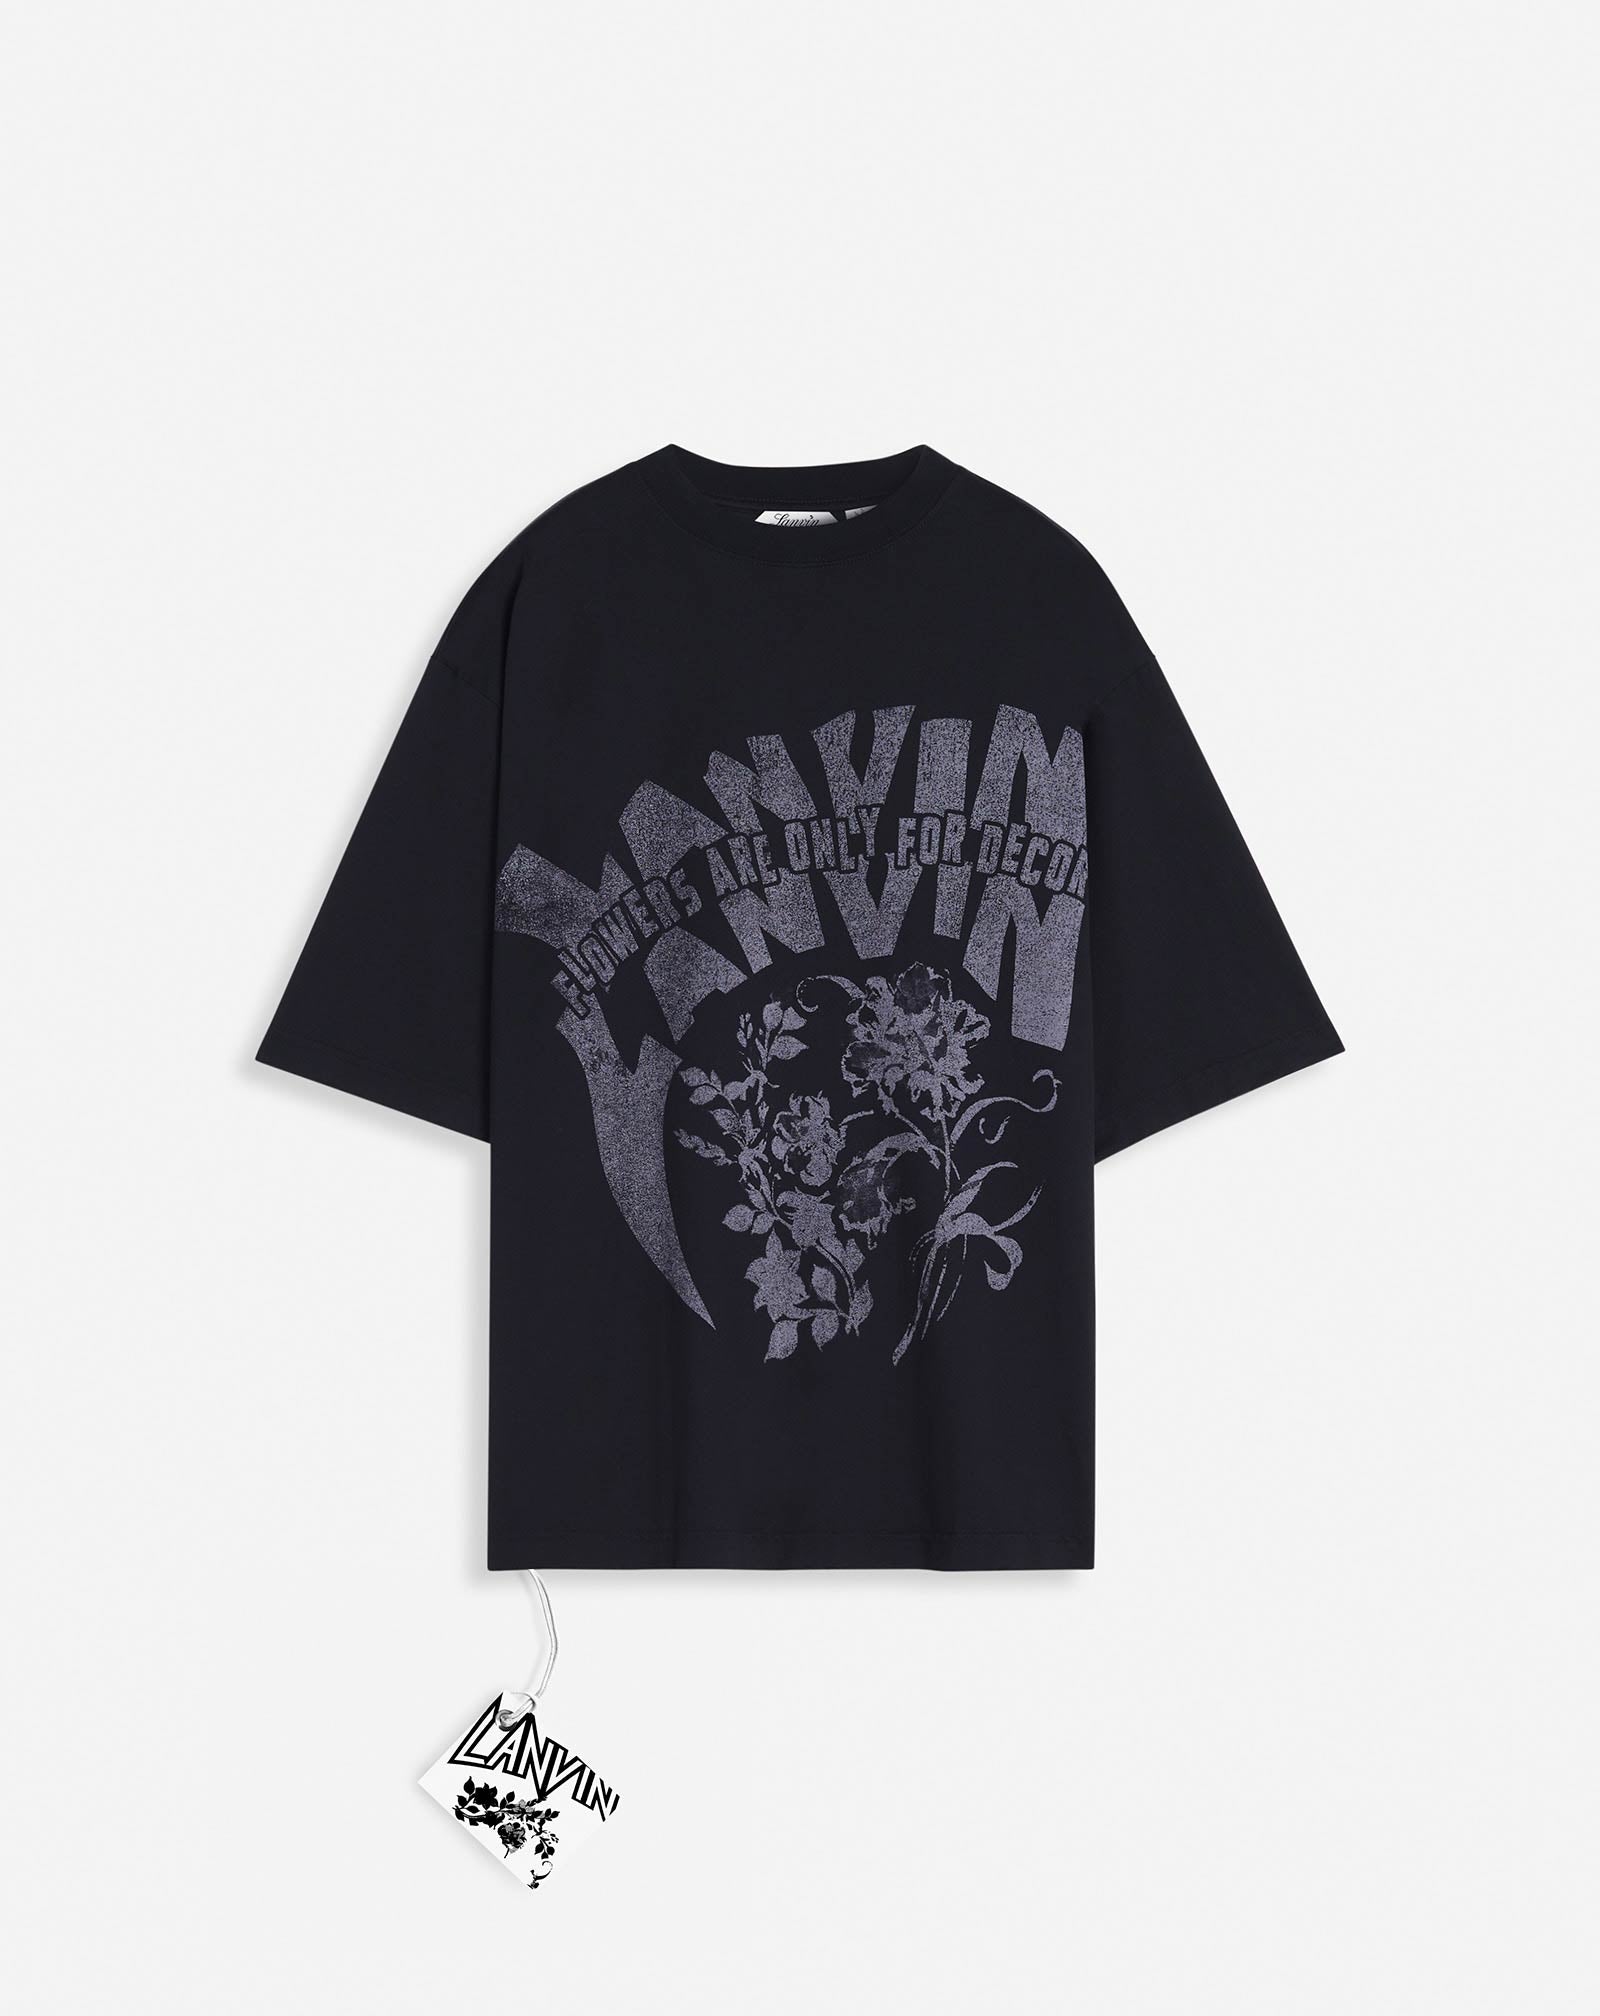 Lanvin x future unisex loose-fit printed t-shirt